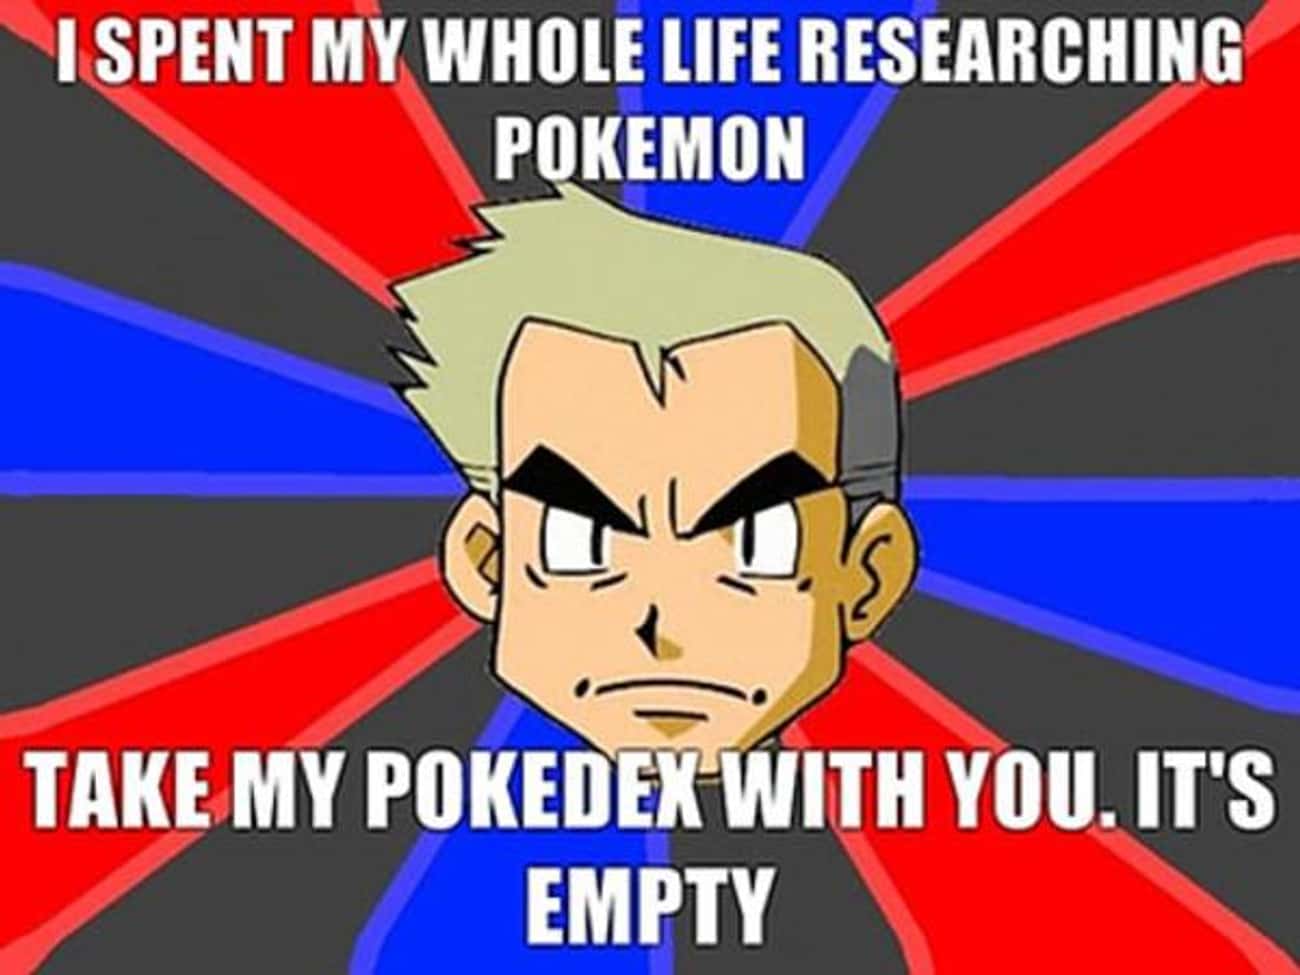 Pokemon meme about Professor Oak's pokedex